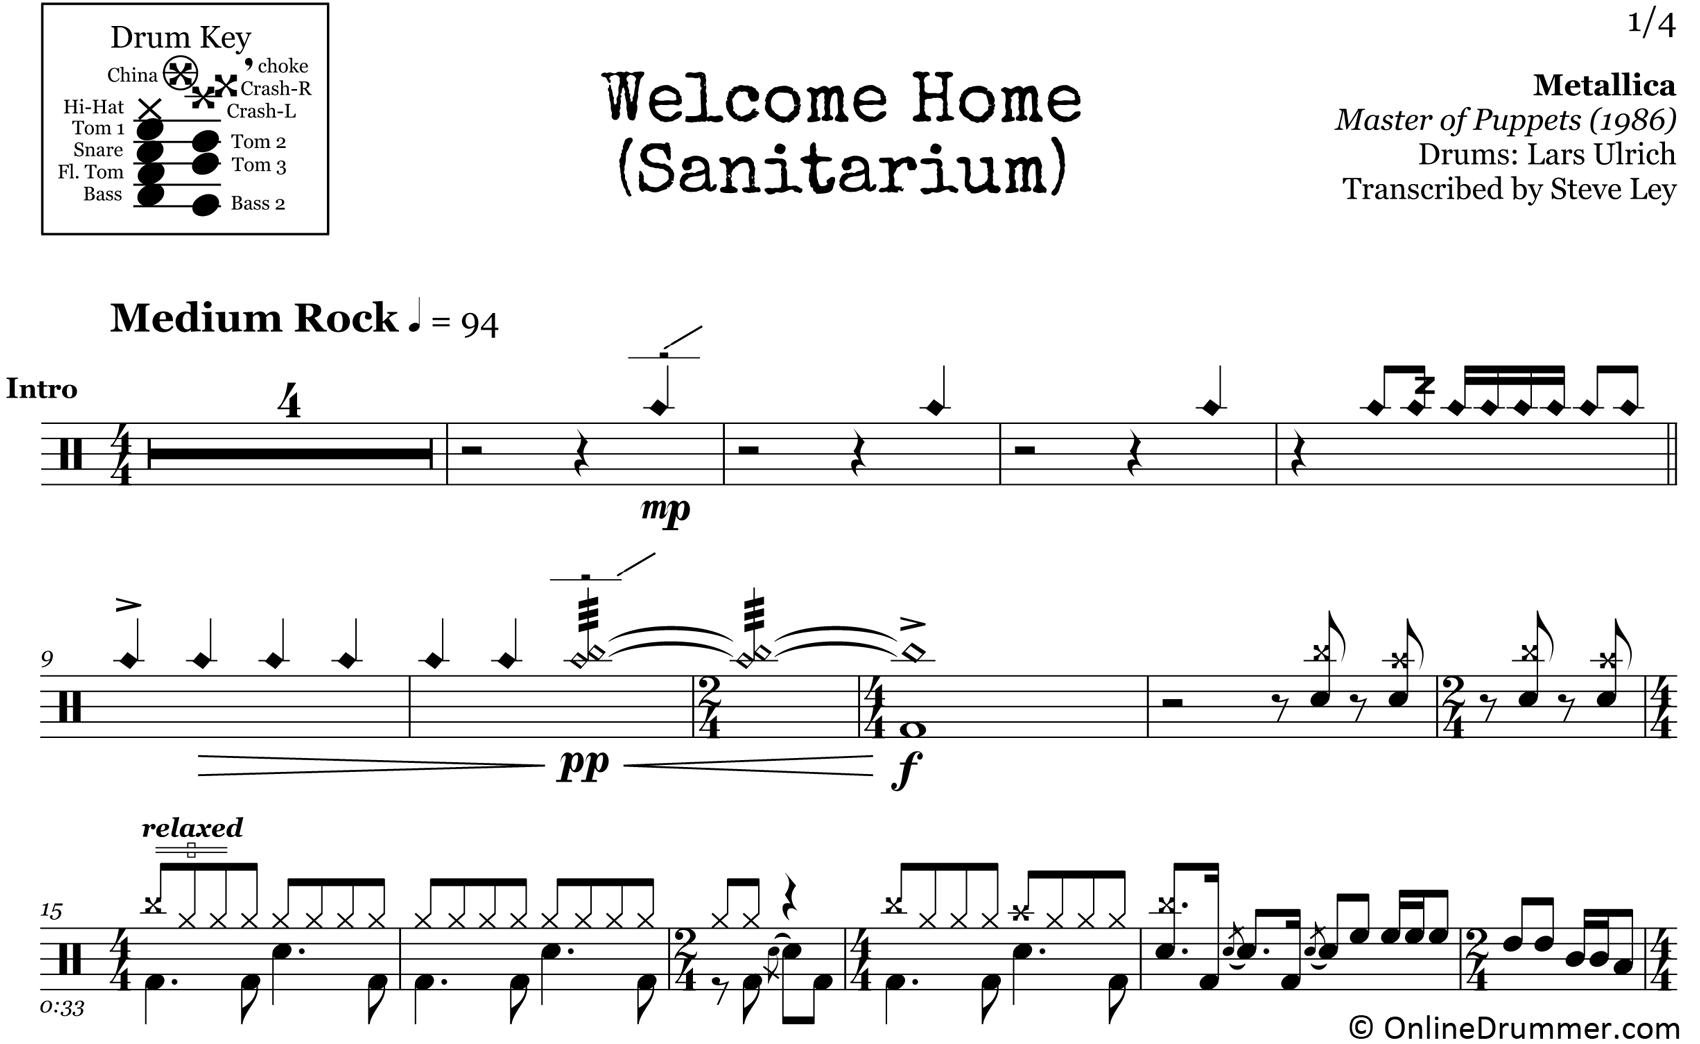 Welcome Home (Sanitarium) - Metallica - Drum Sheet Music